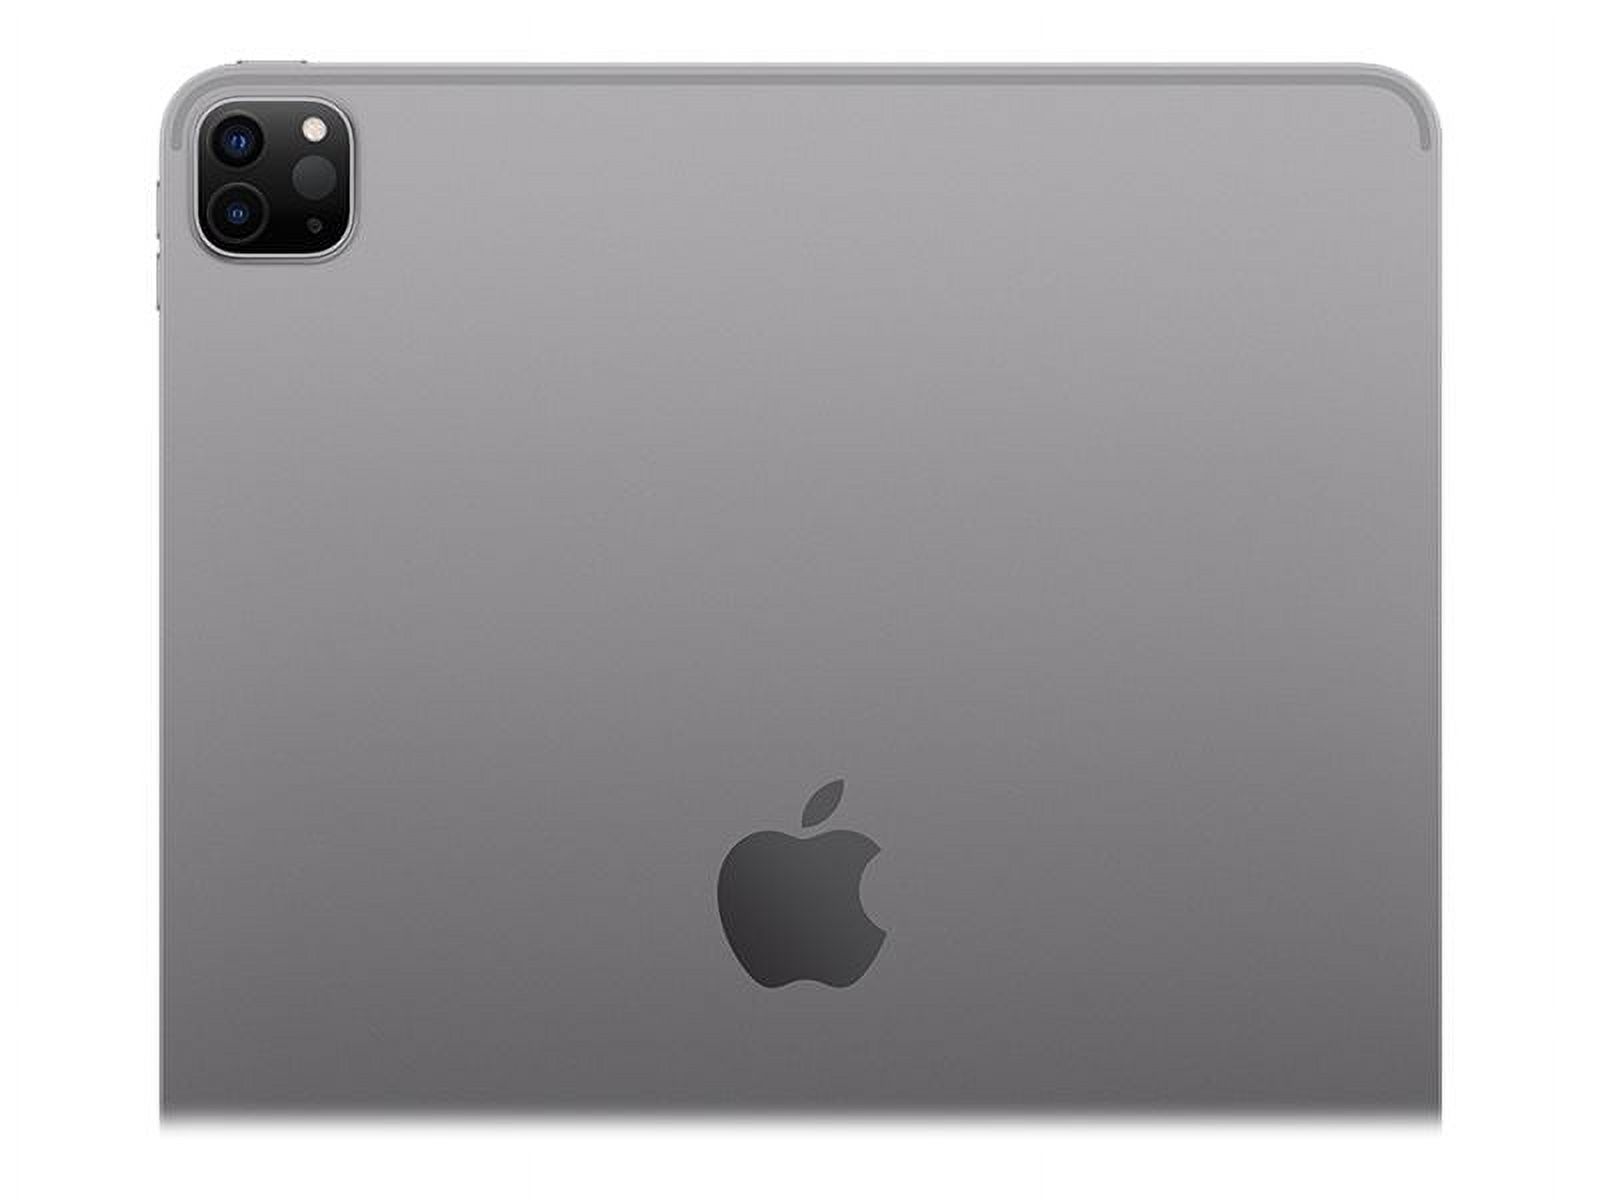 Apple 12.9-inch iPad Pro Wi-Fi 128GB - Space Gray - (6th Gen) - image 4 of 5